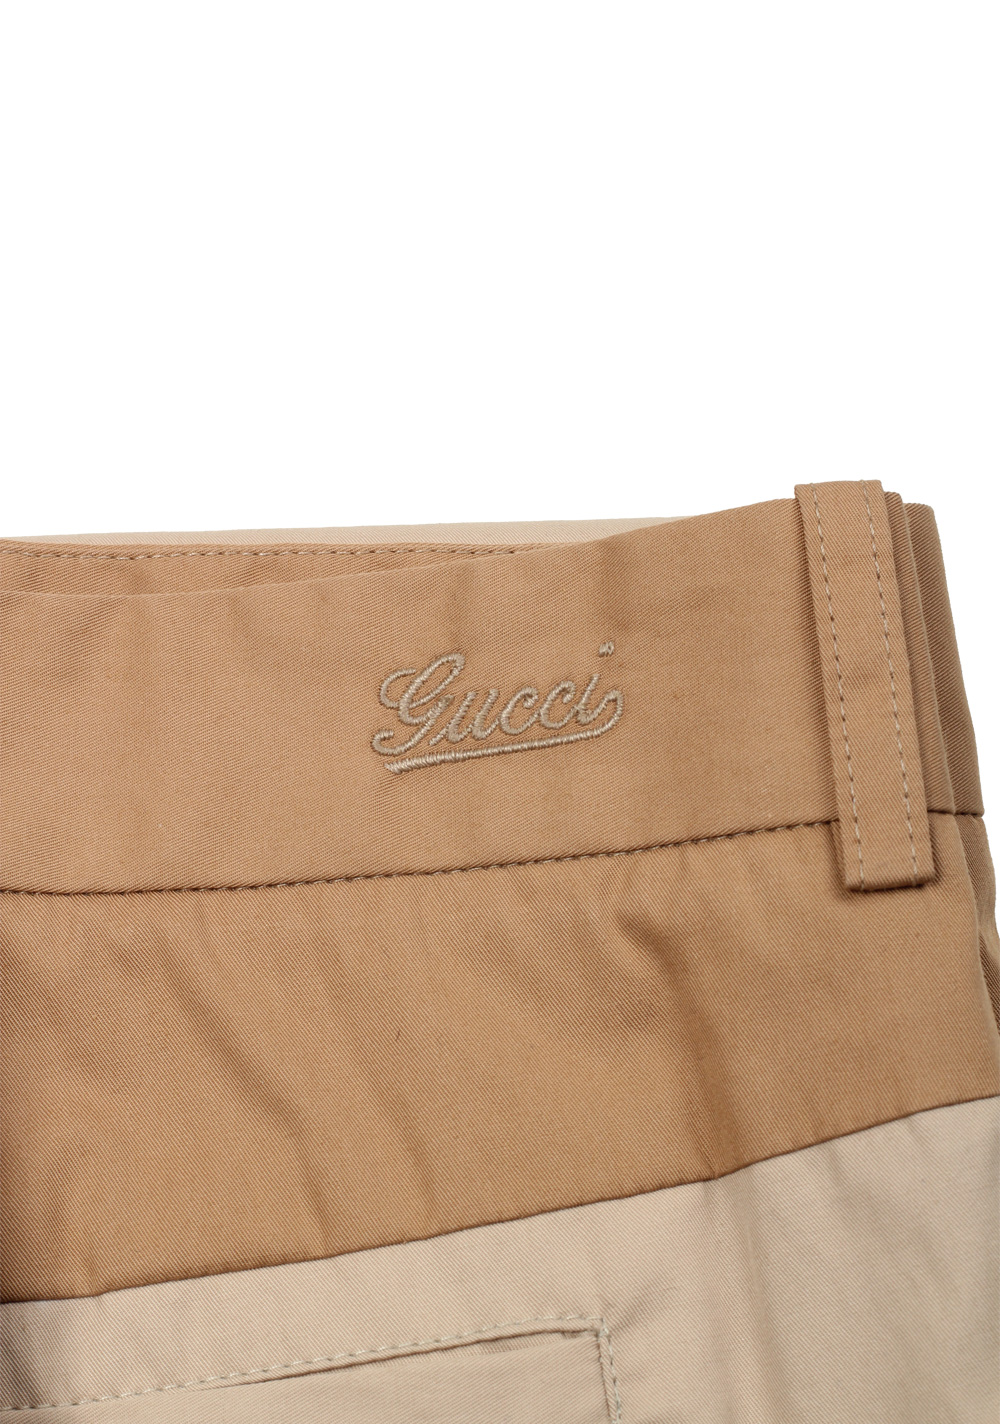 Gucci Beige Trousers Size 54 / 38 U.S. In Cotton | Costume Limité